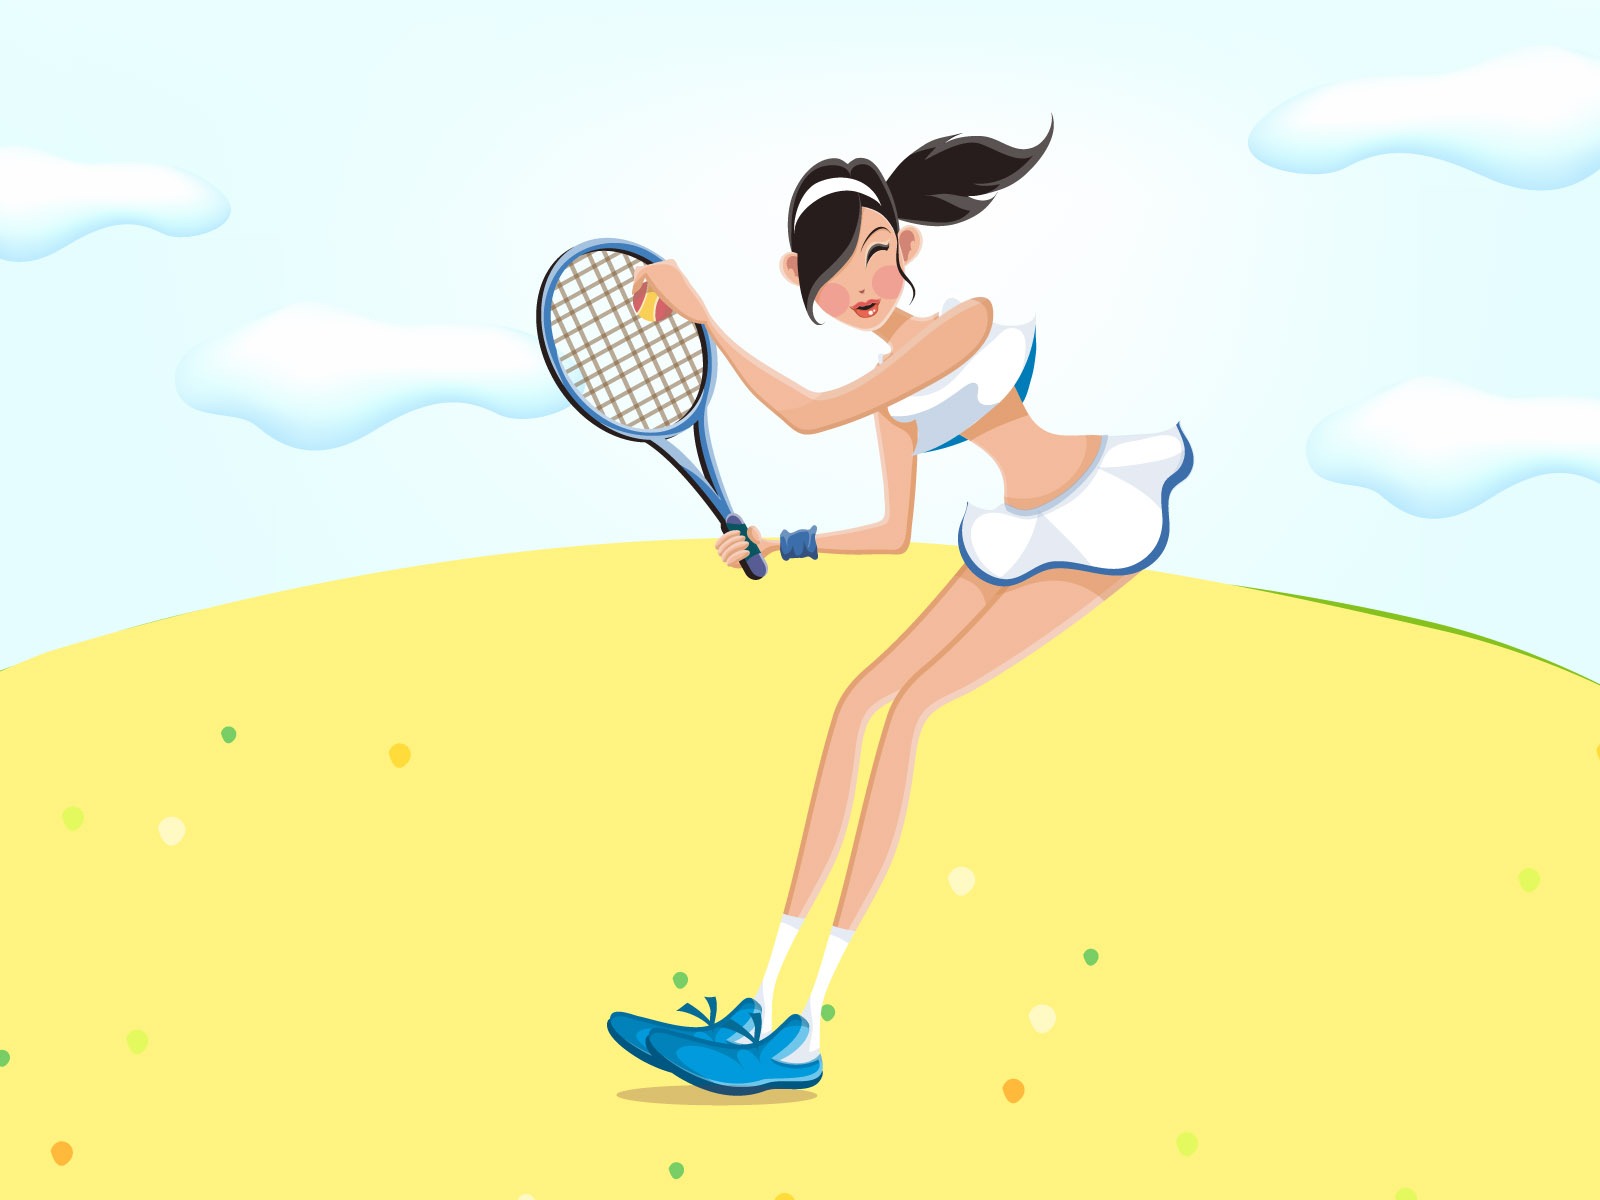 Women's leisure sports vector #13 - 1600x1200